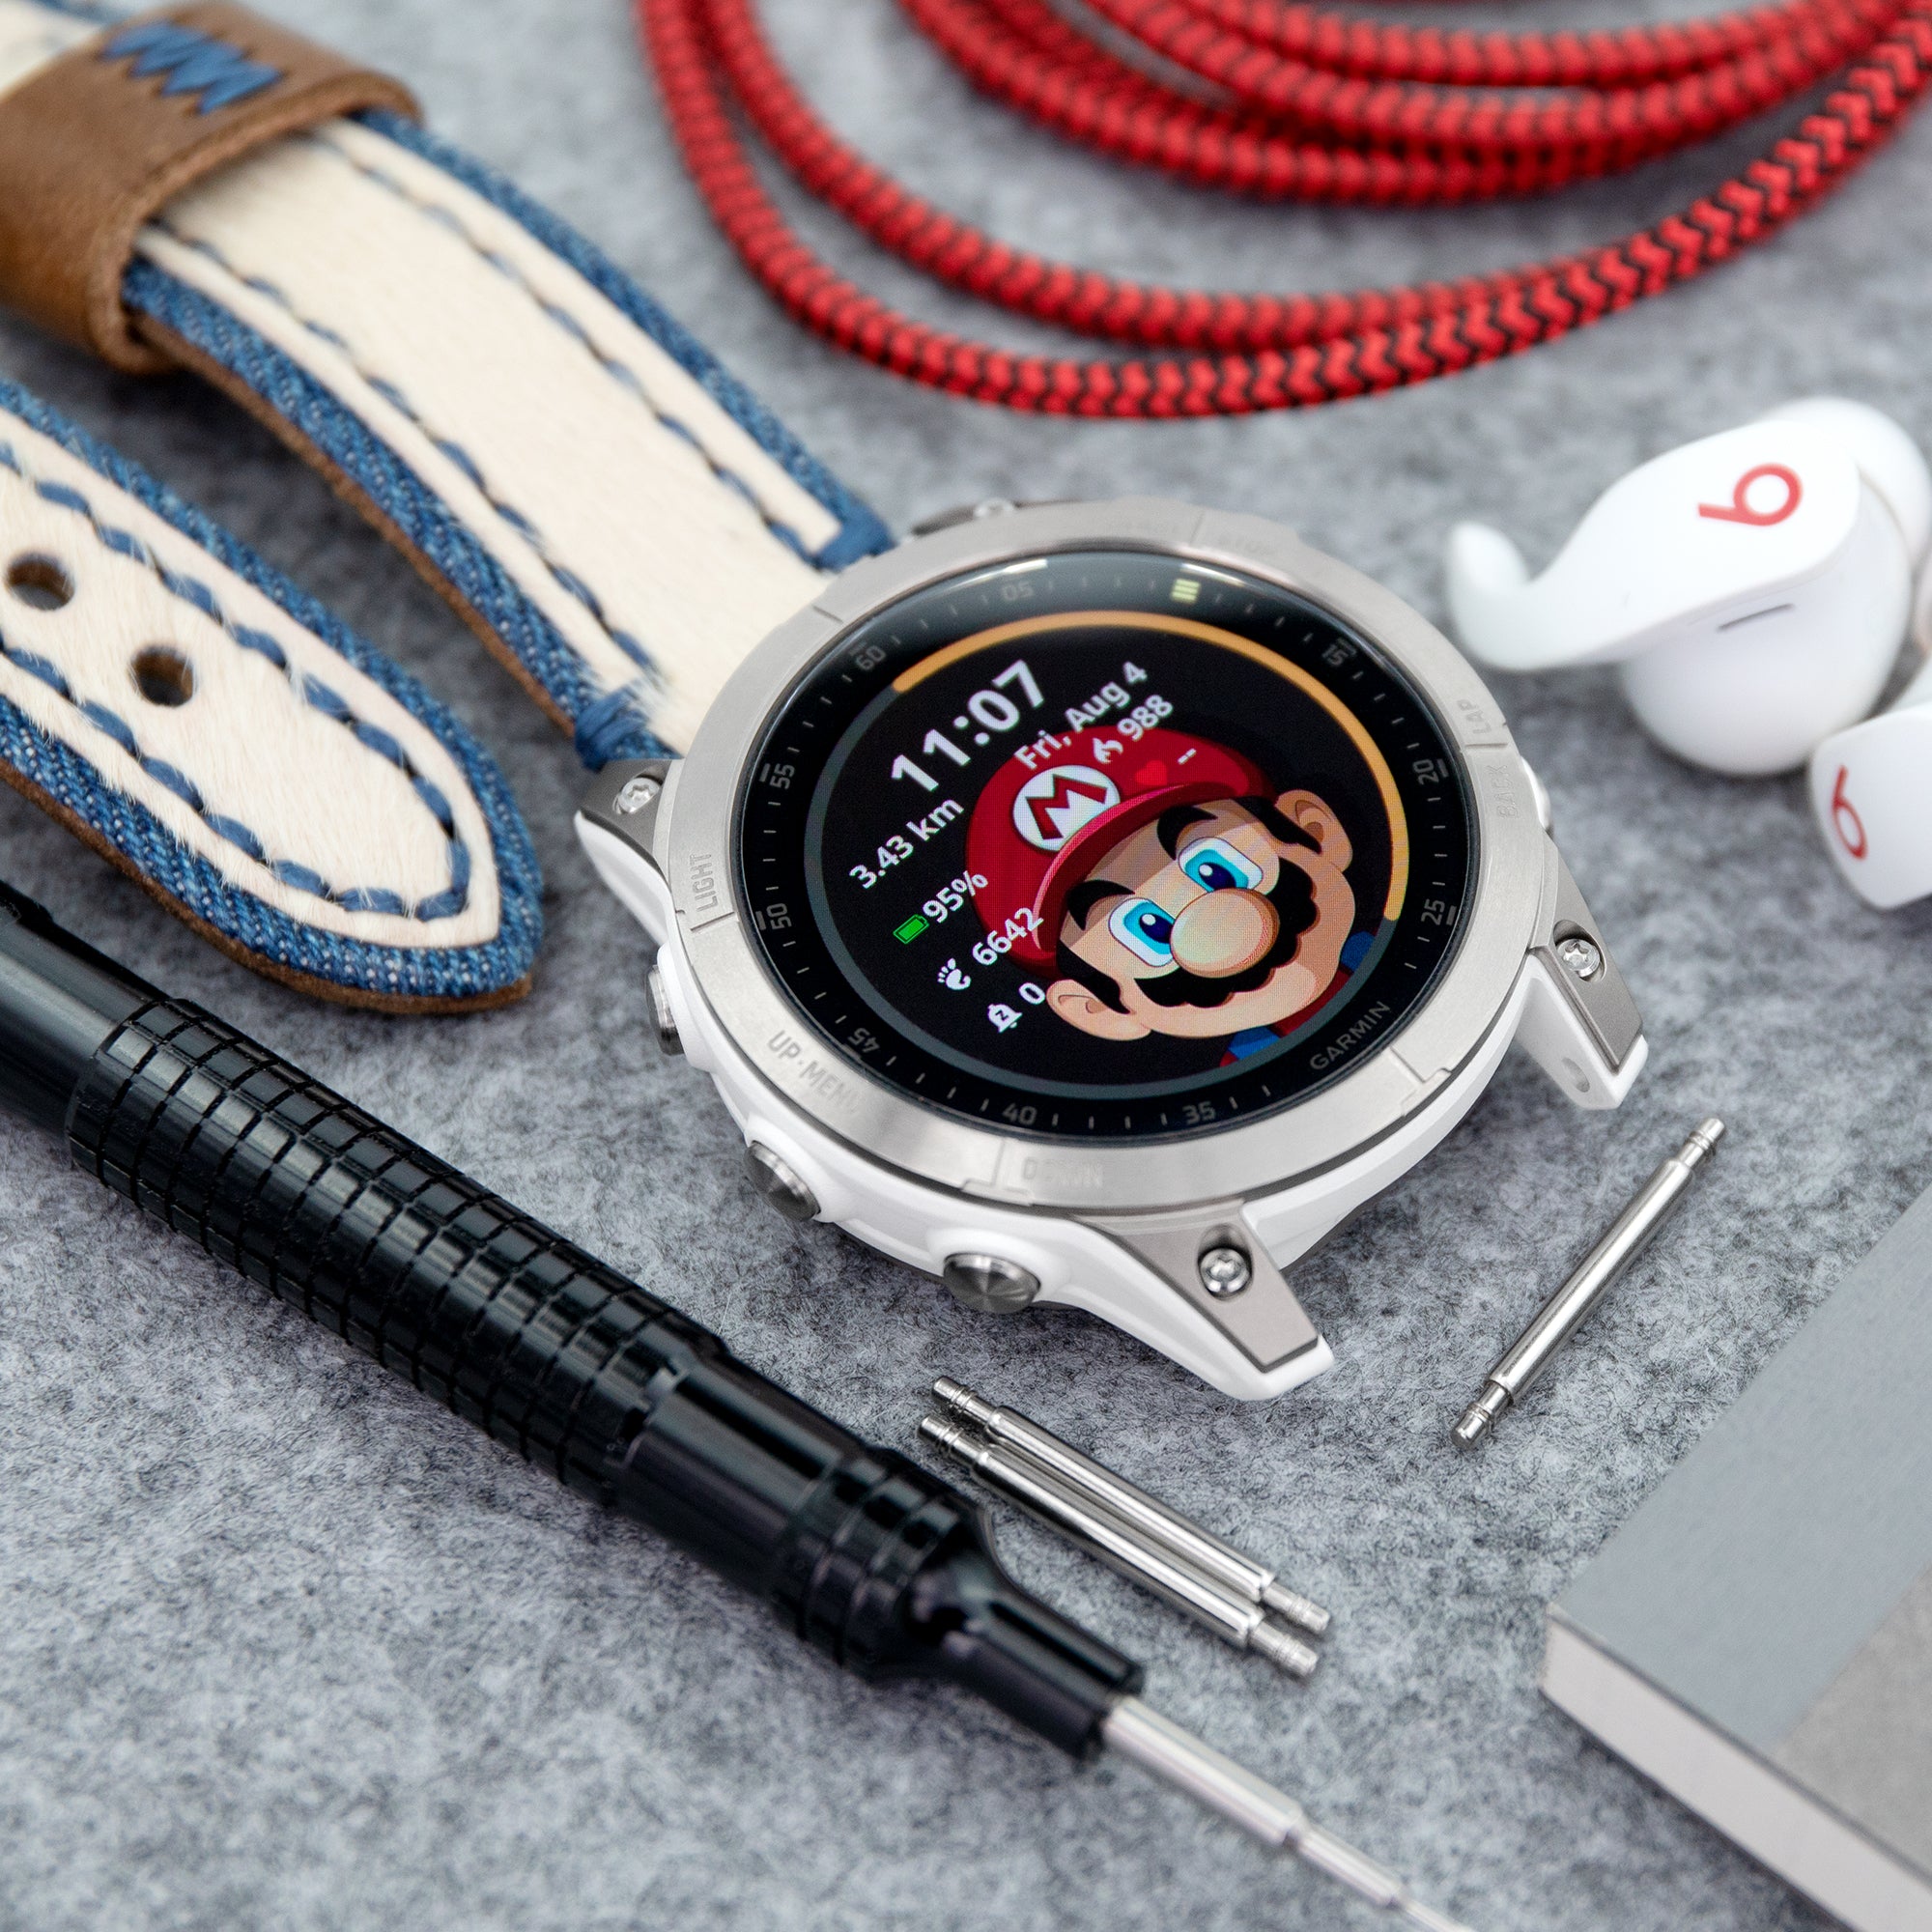 Ksix Titanium smartwatch, AMOLED 1,43” display, 2 straps, 5 days